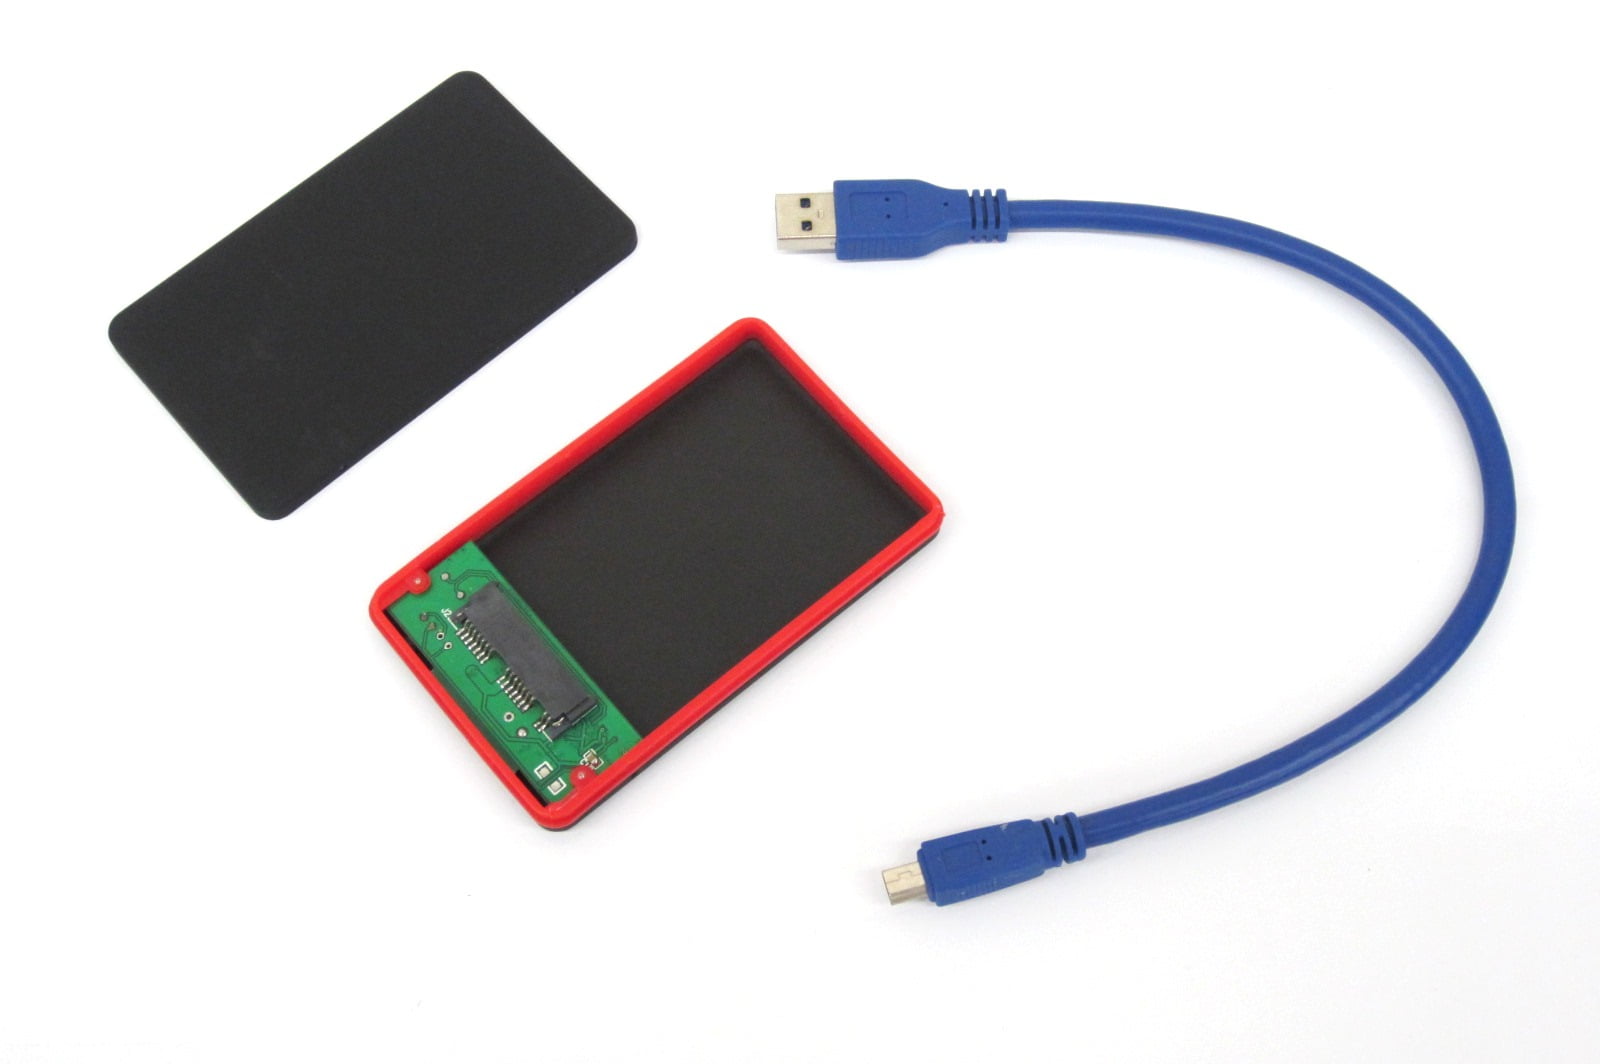 St Voltage distortion Toshiba External 1.8 Inch Micro SATA SSD HDD USB 3.0 Case - Walmart.com